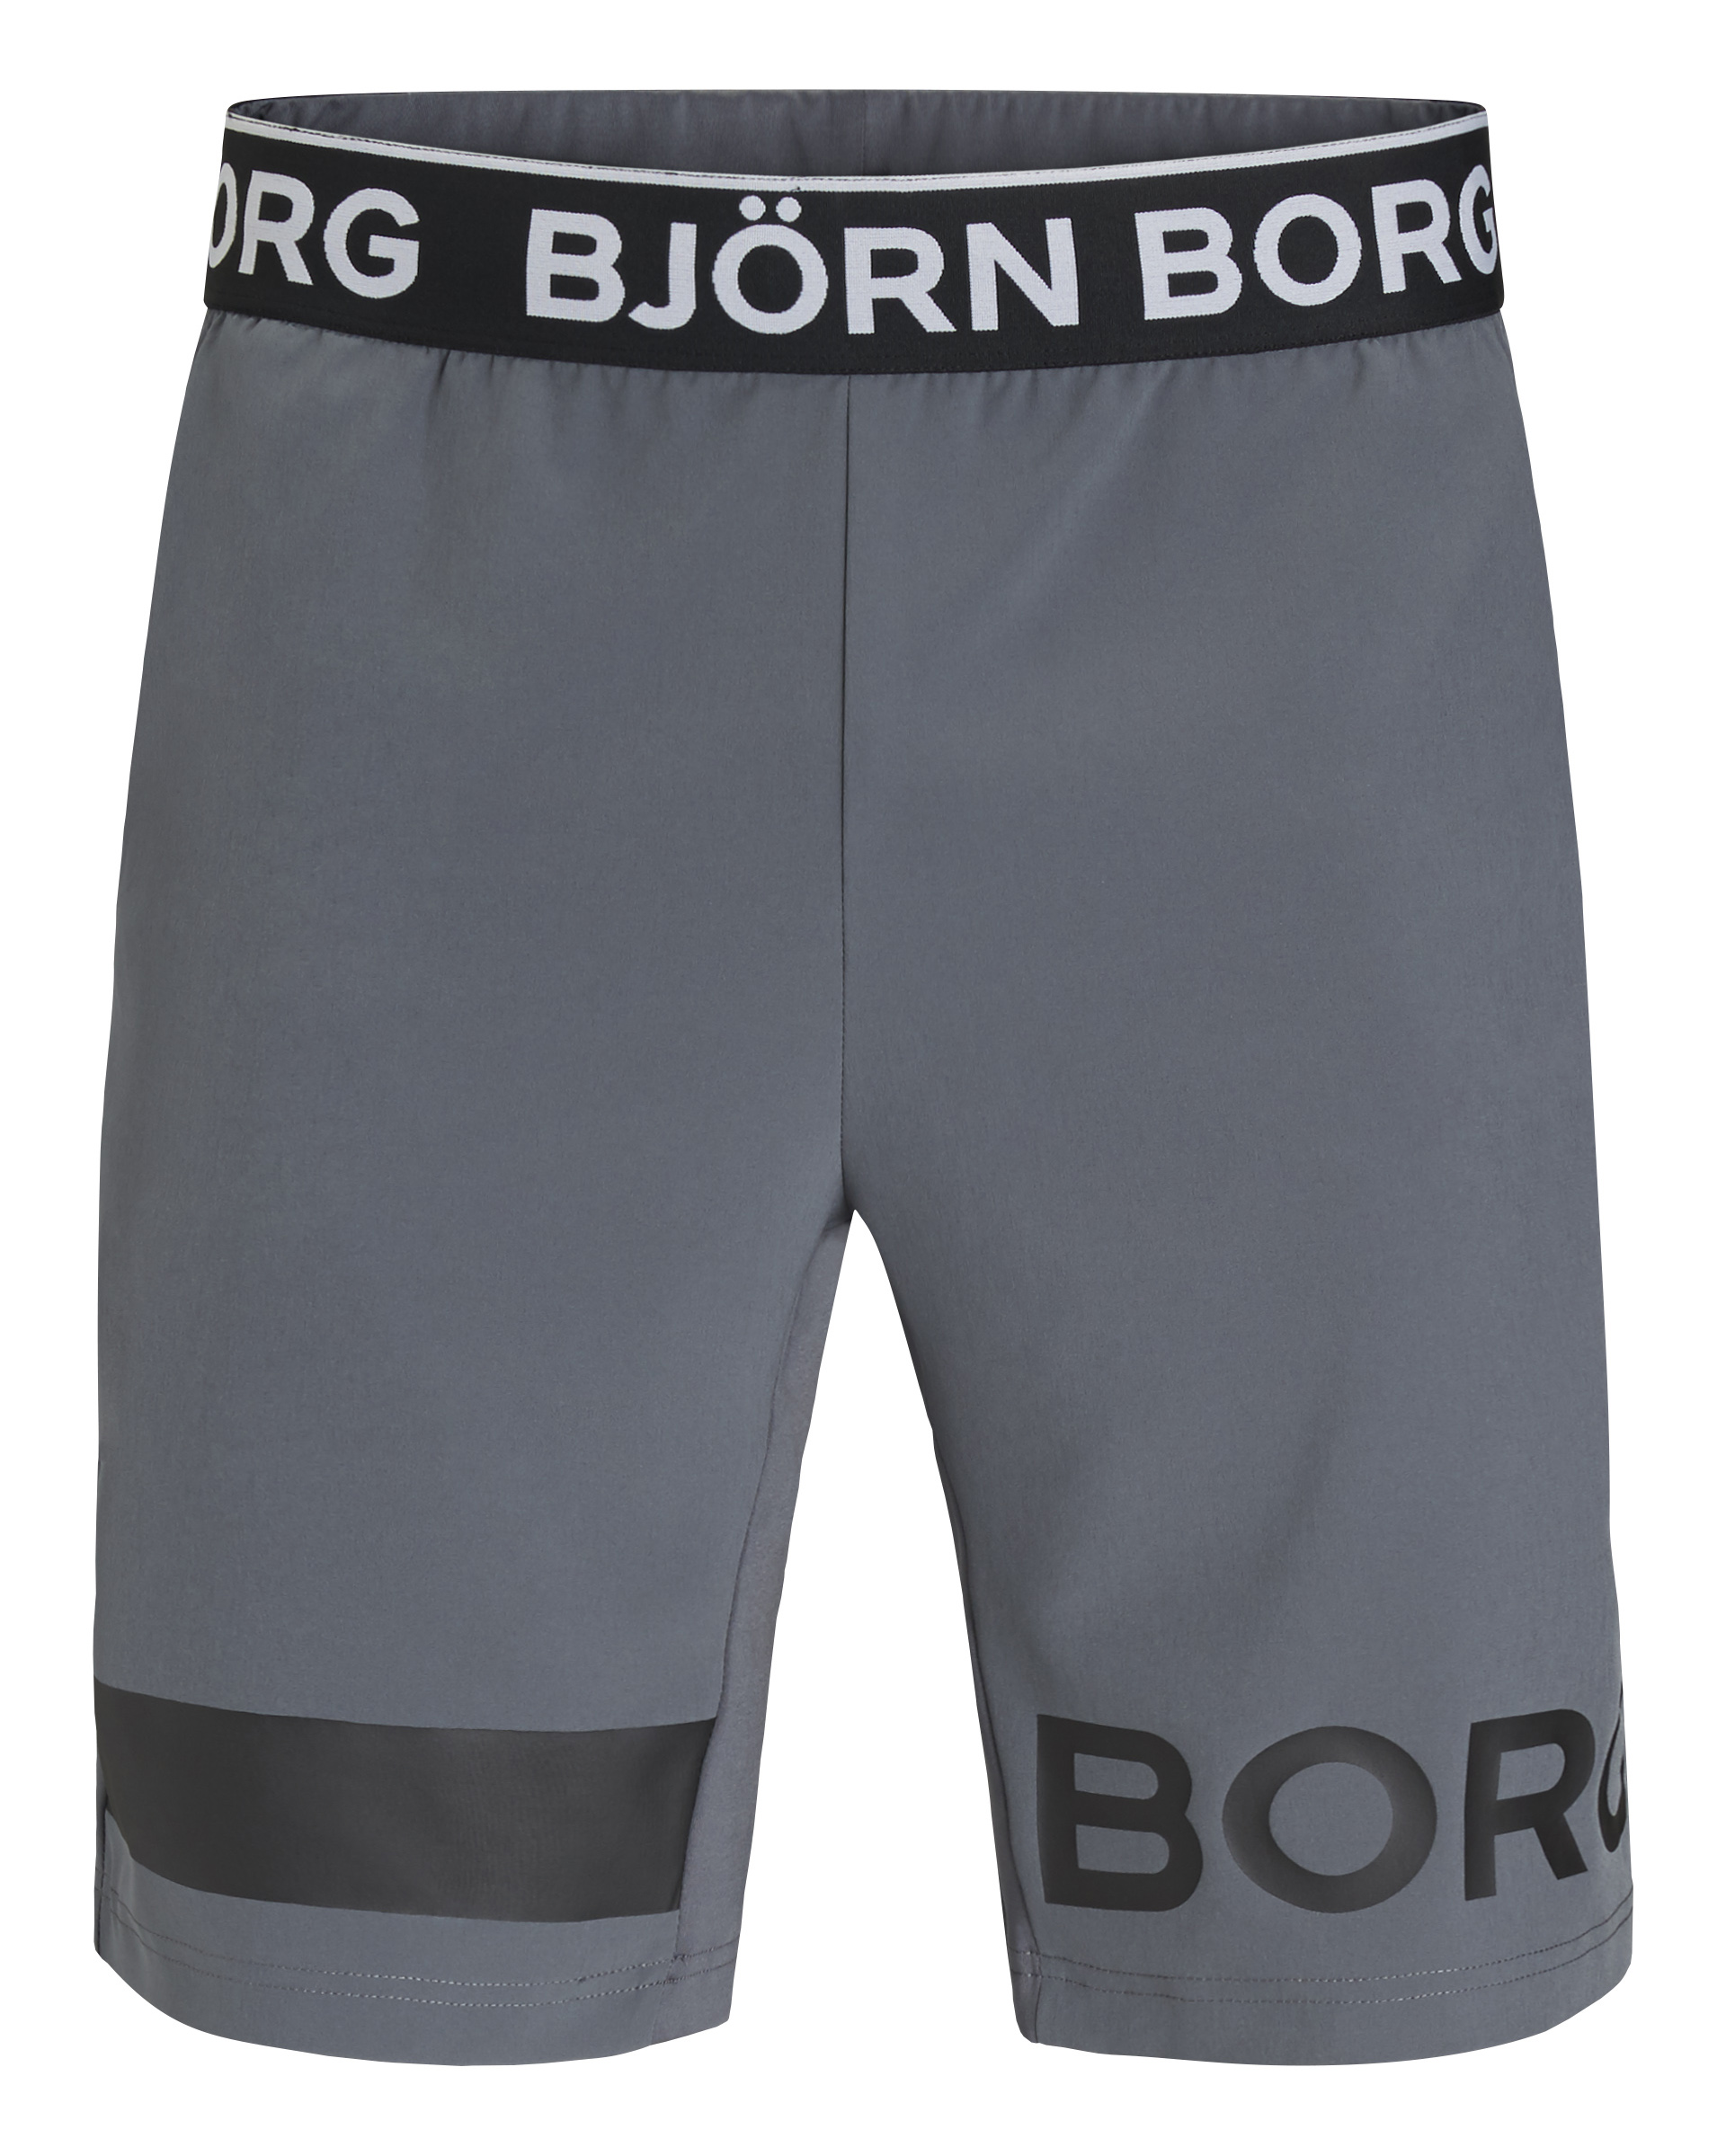 Bjorn Borg Shorts August - Iron Gate